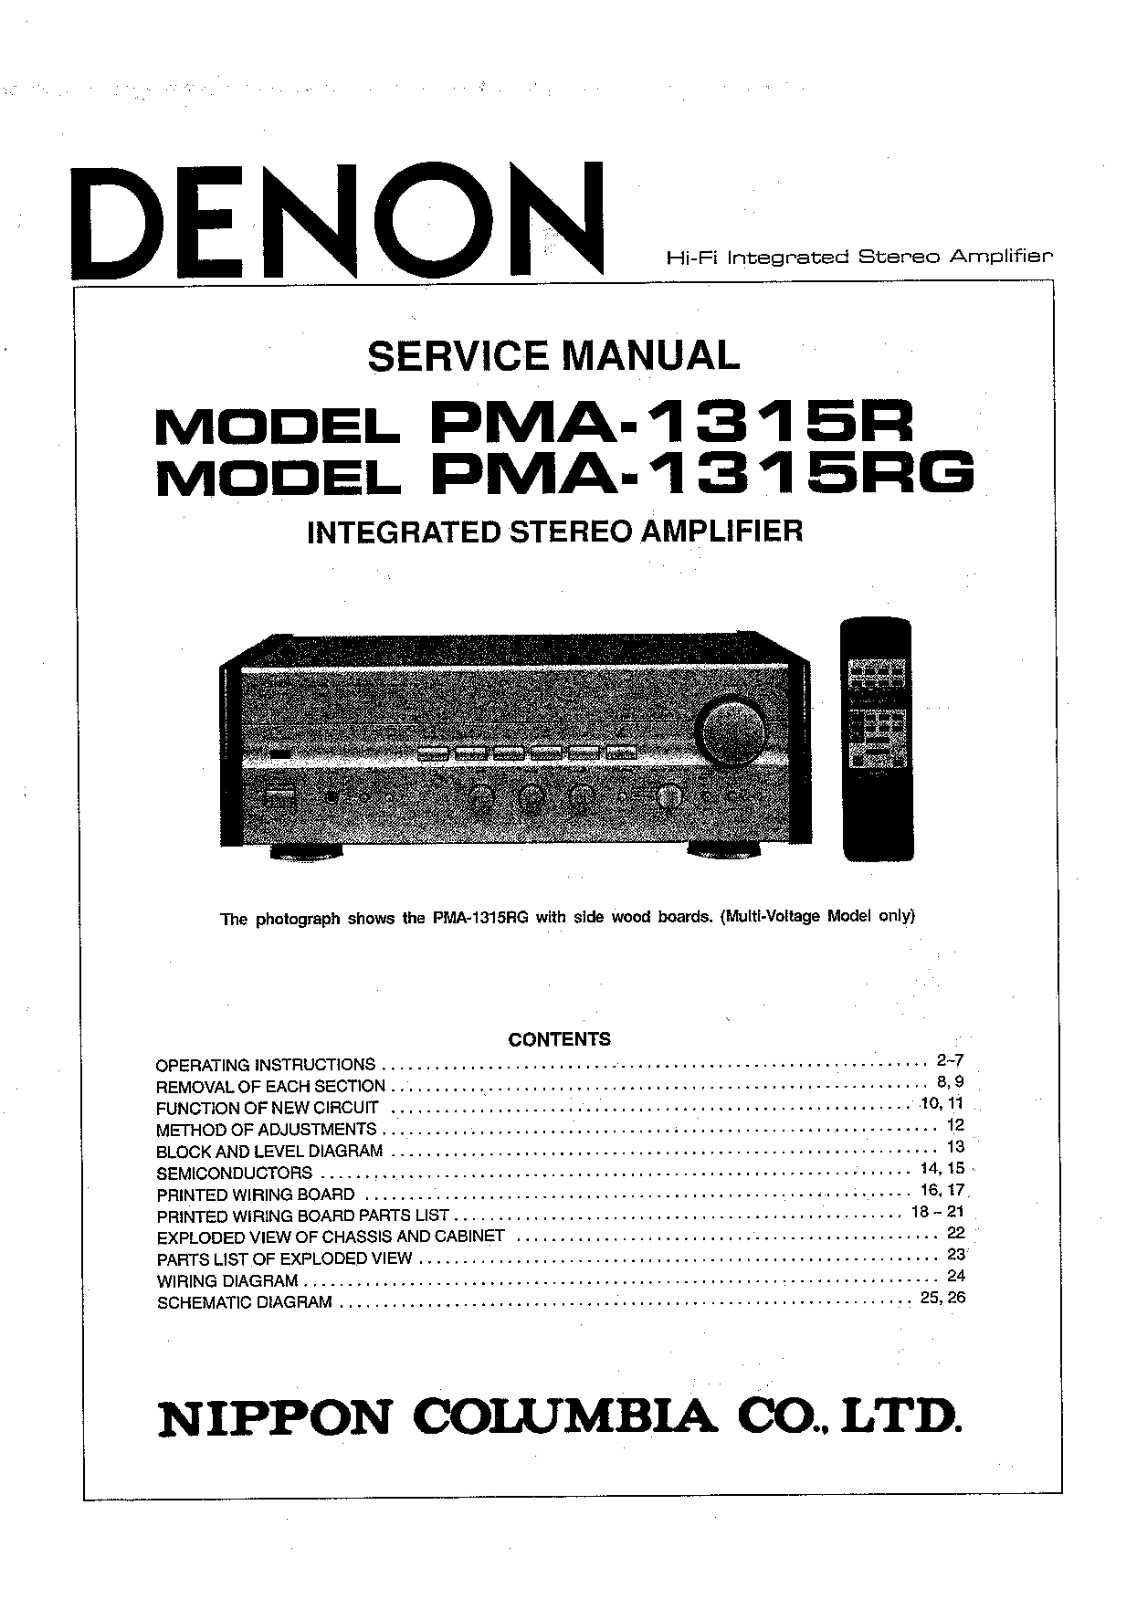 Denon PMA-1315RG Service Manual